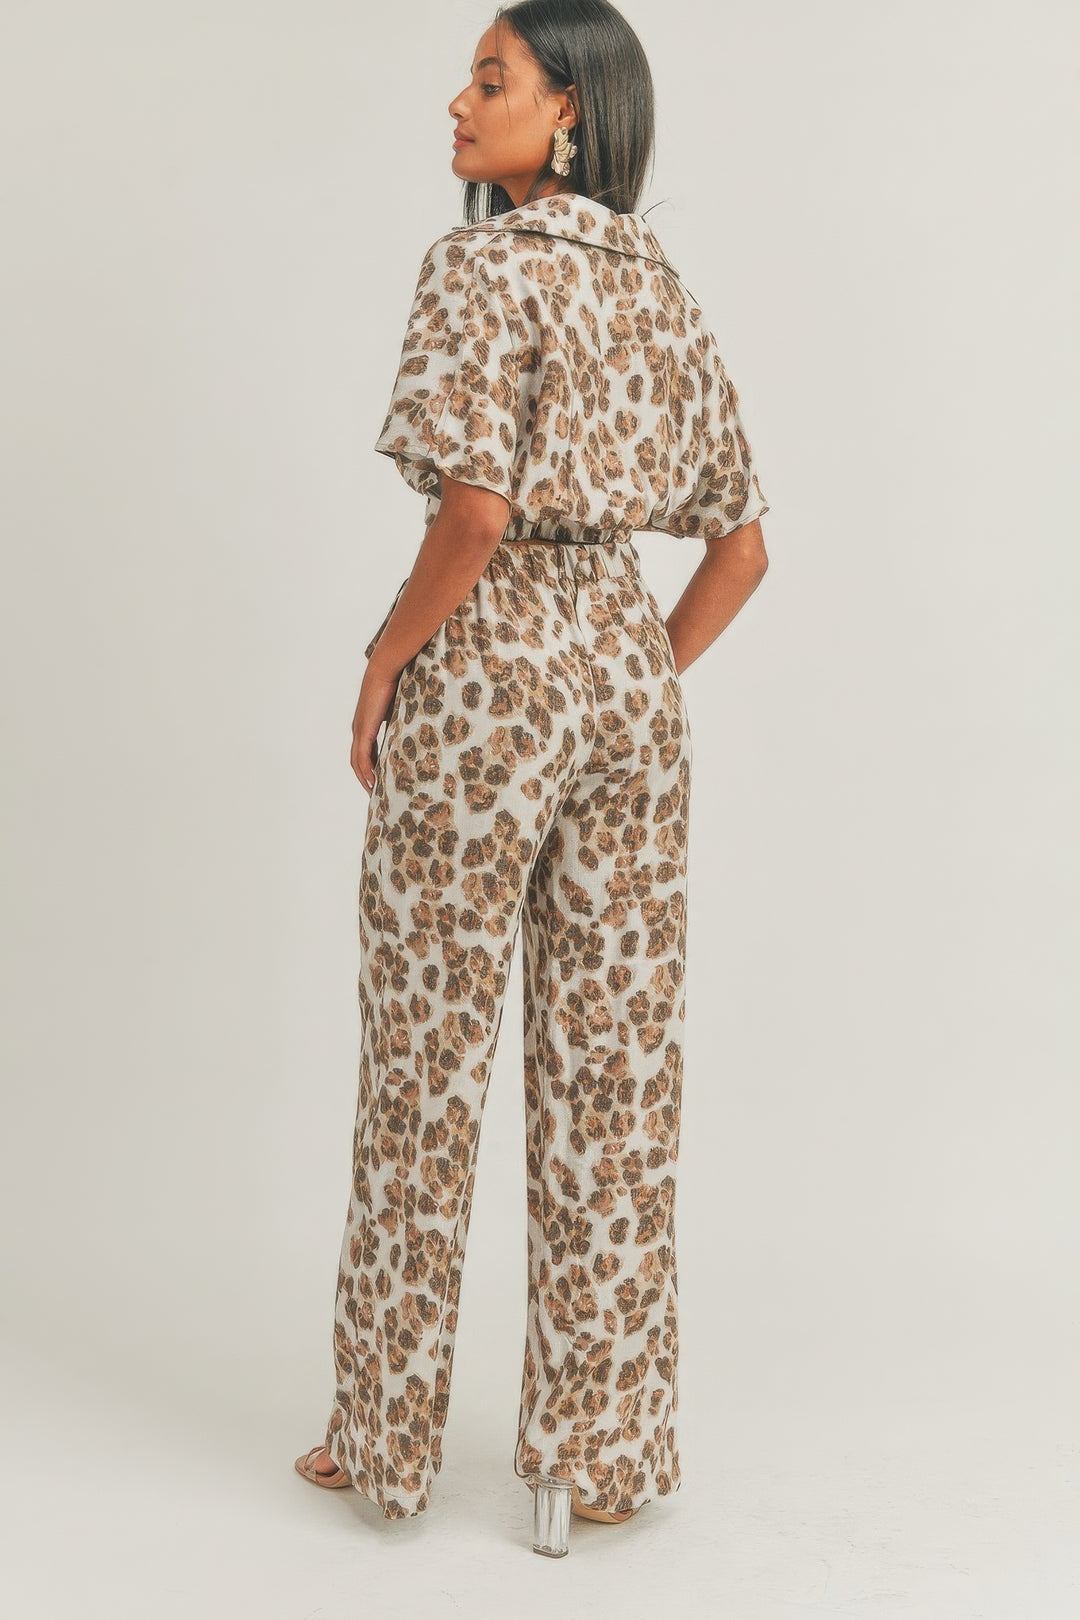 a person wearing a leopard print jumpsuit